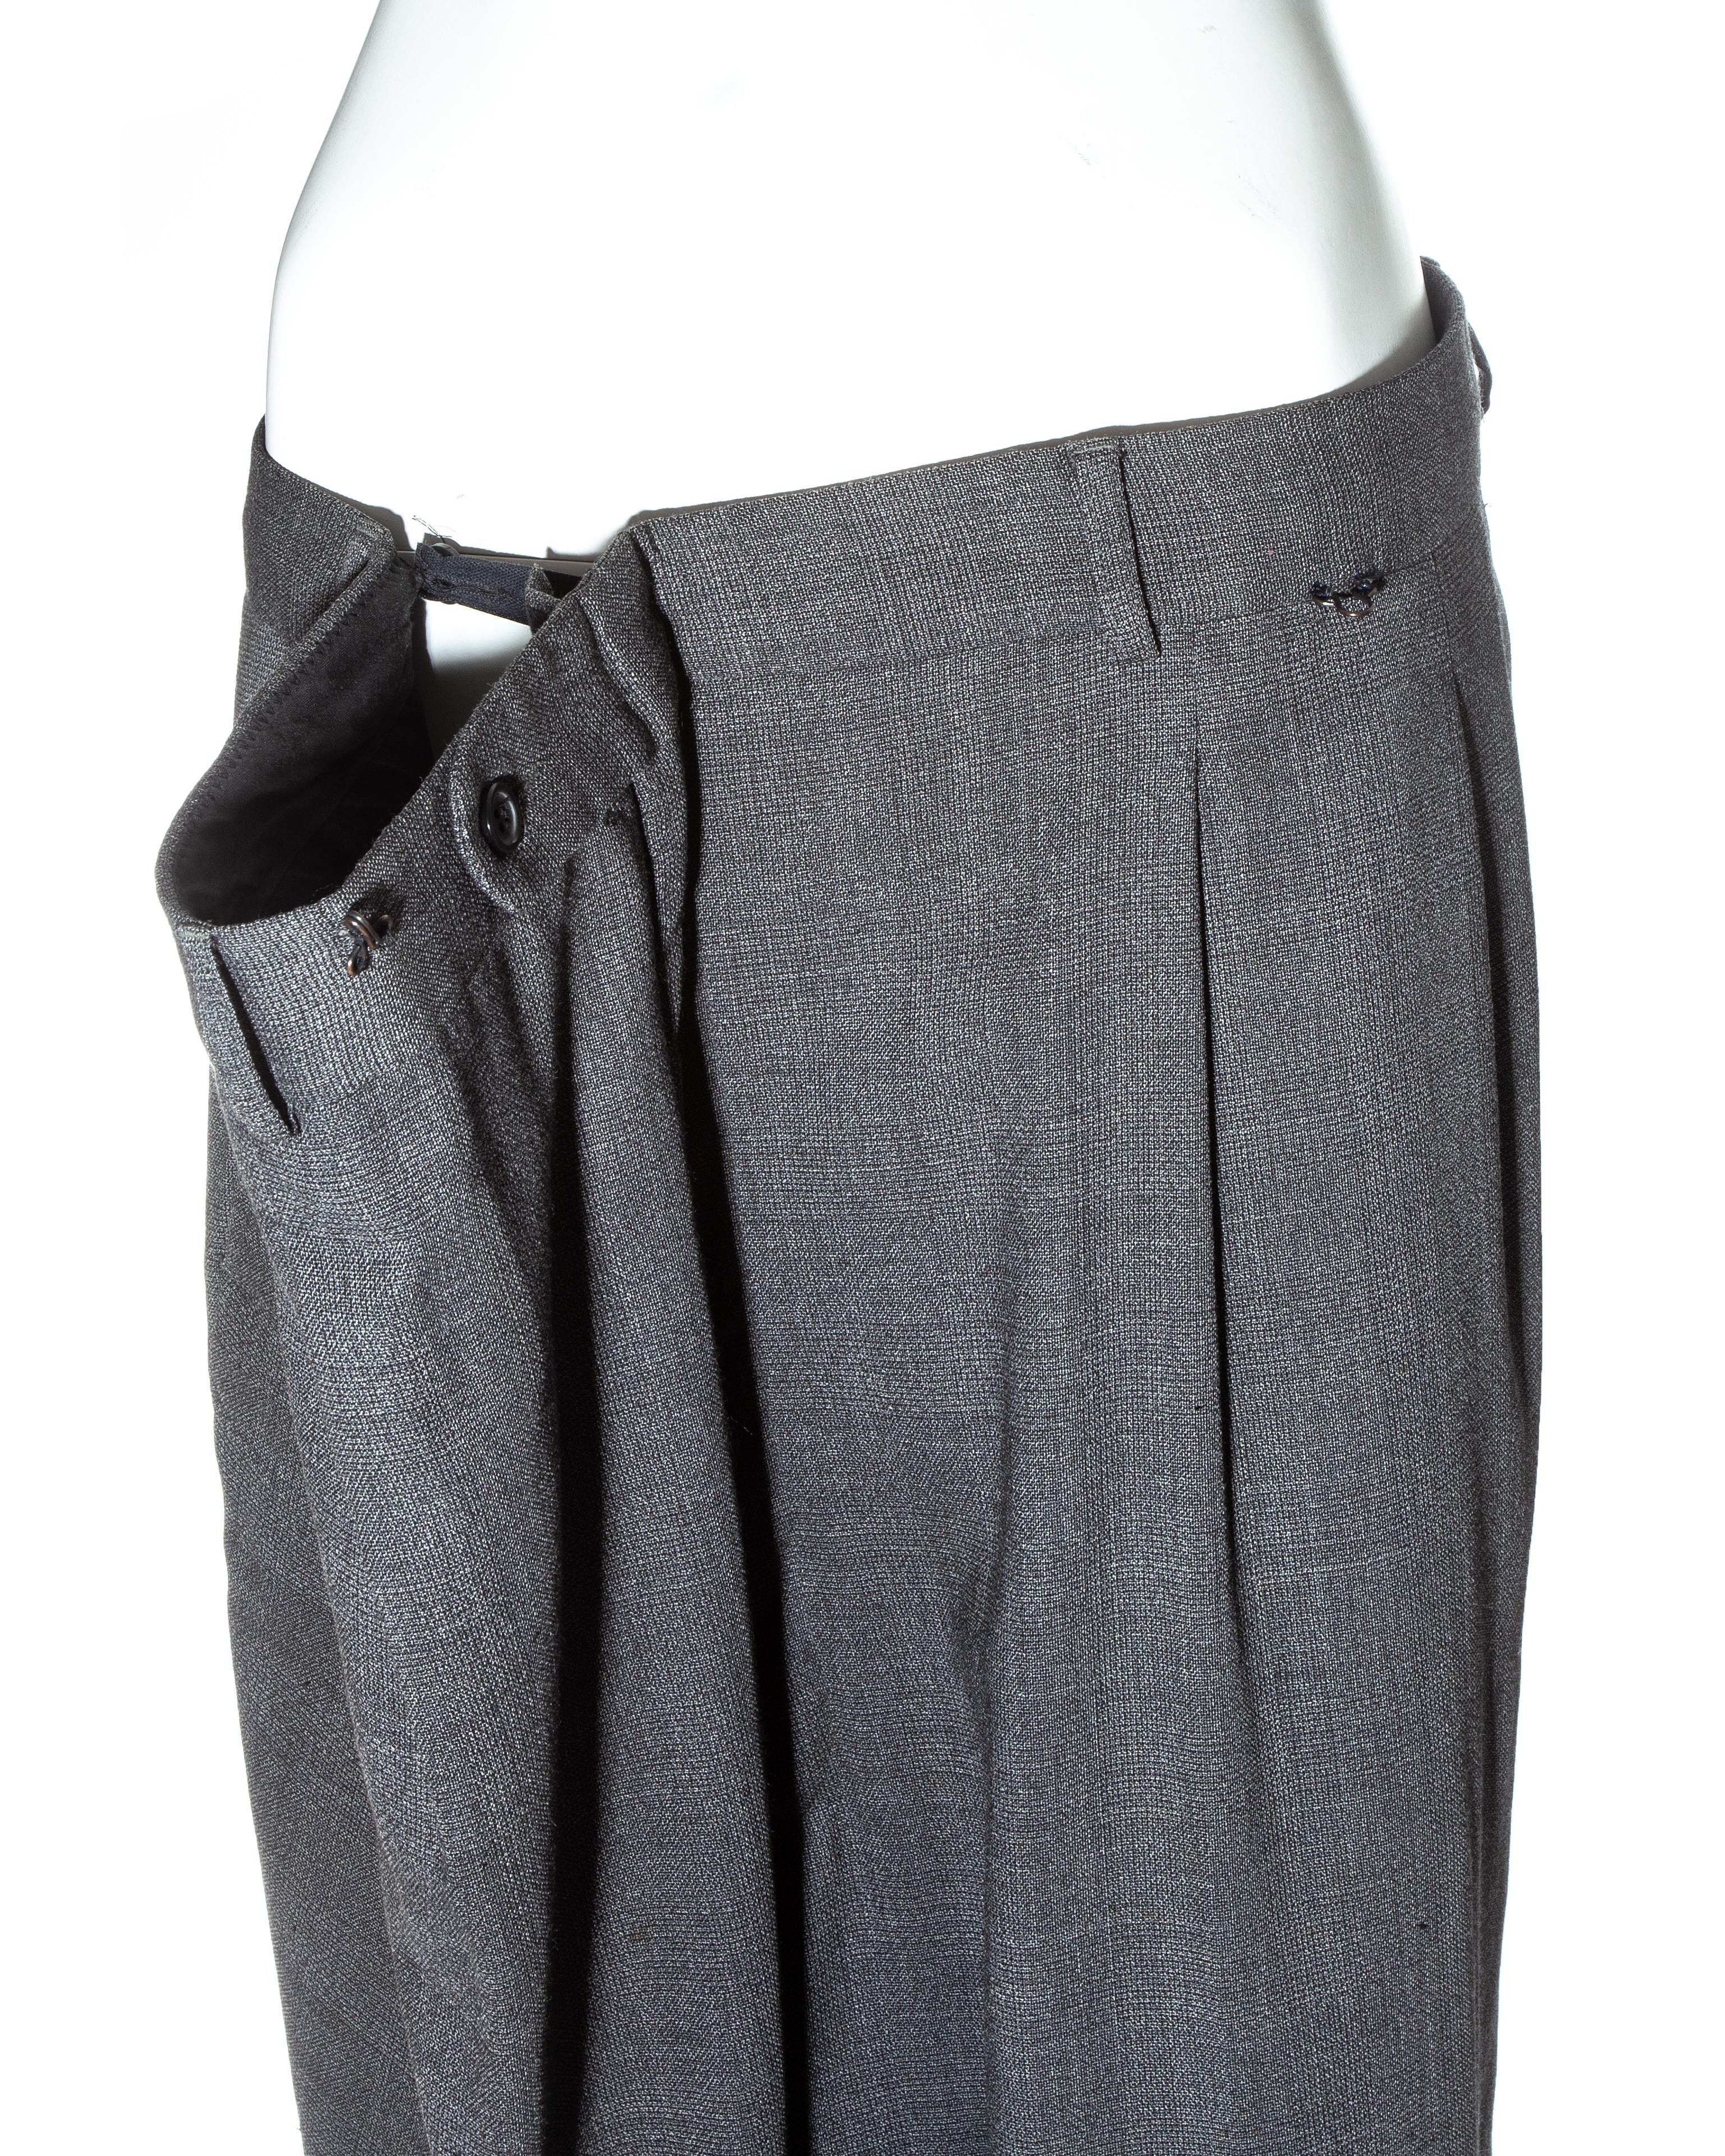 Margiela grey wool oversized size 78 folded pants, fw 2000 For Sale 1